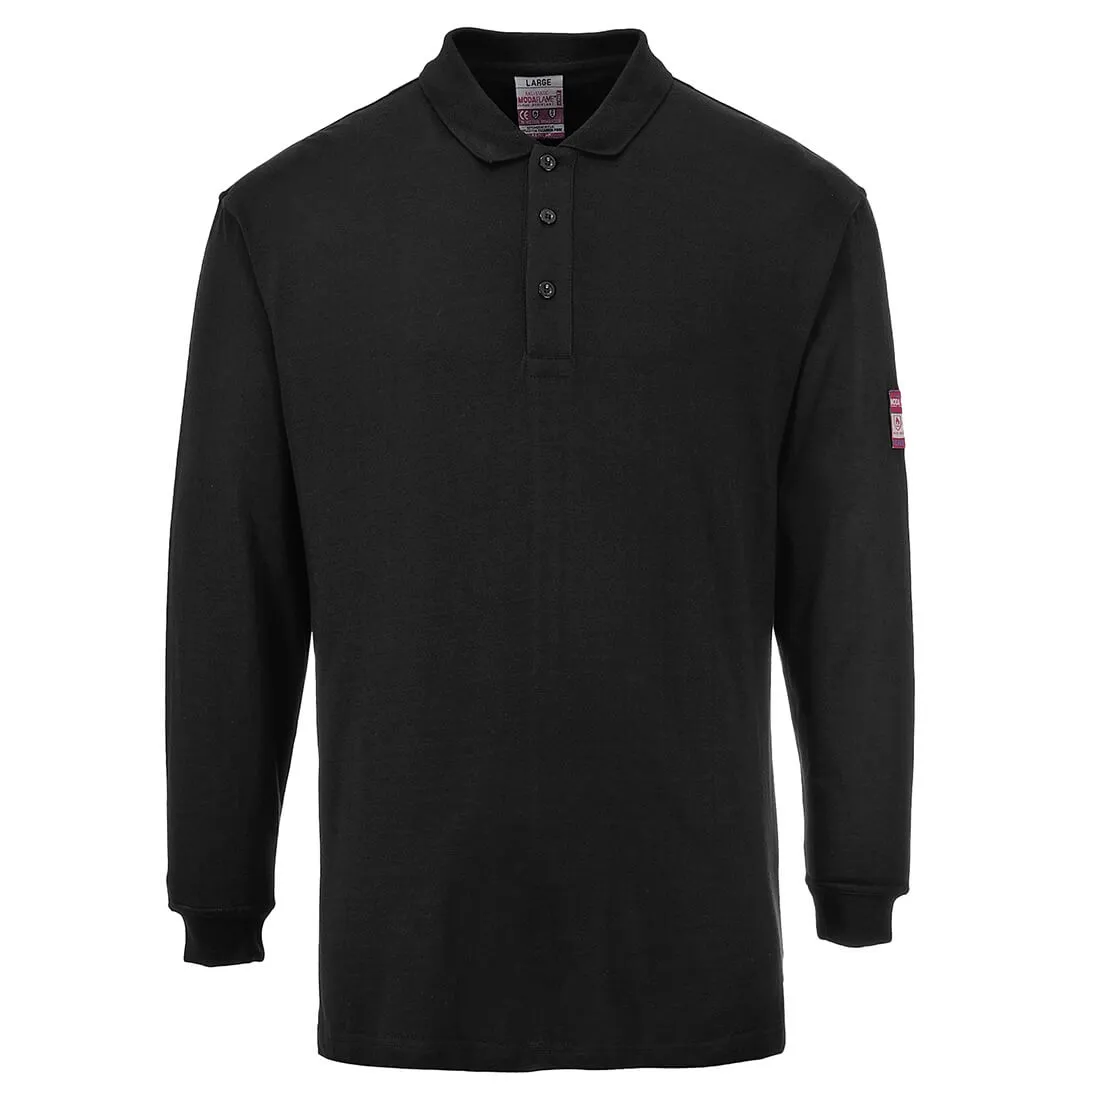 Modaflame Mens Flame Resistant Antistatic Long Sleeve Polo Shirt - Black, L